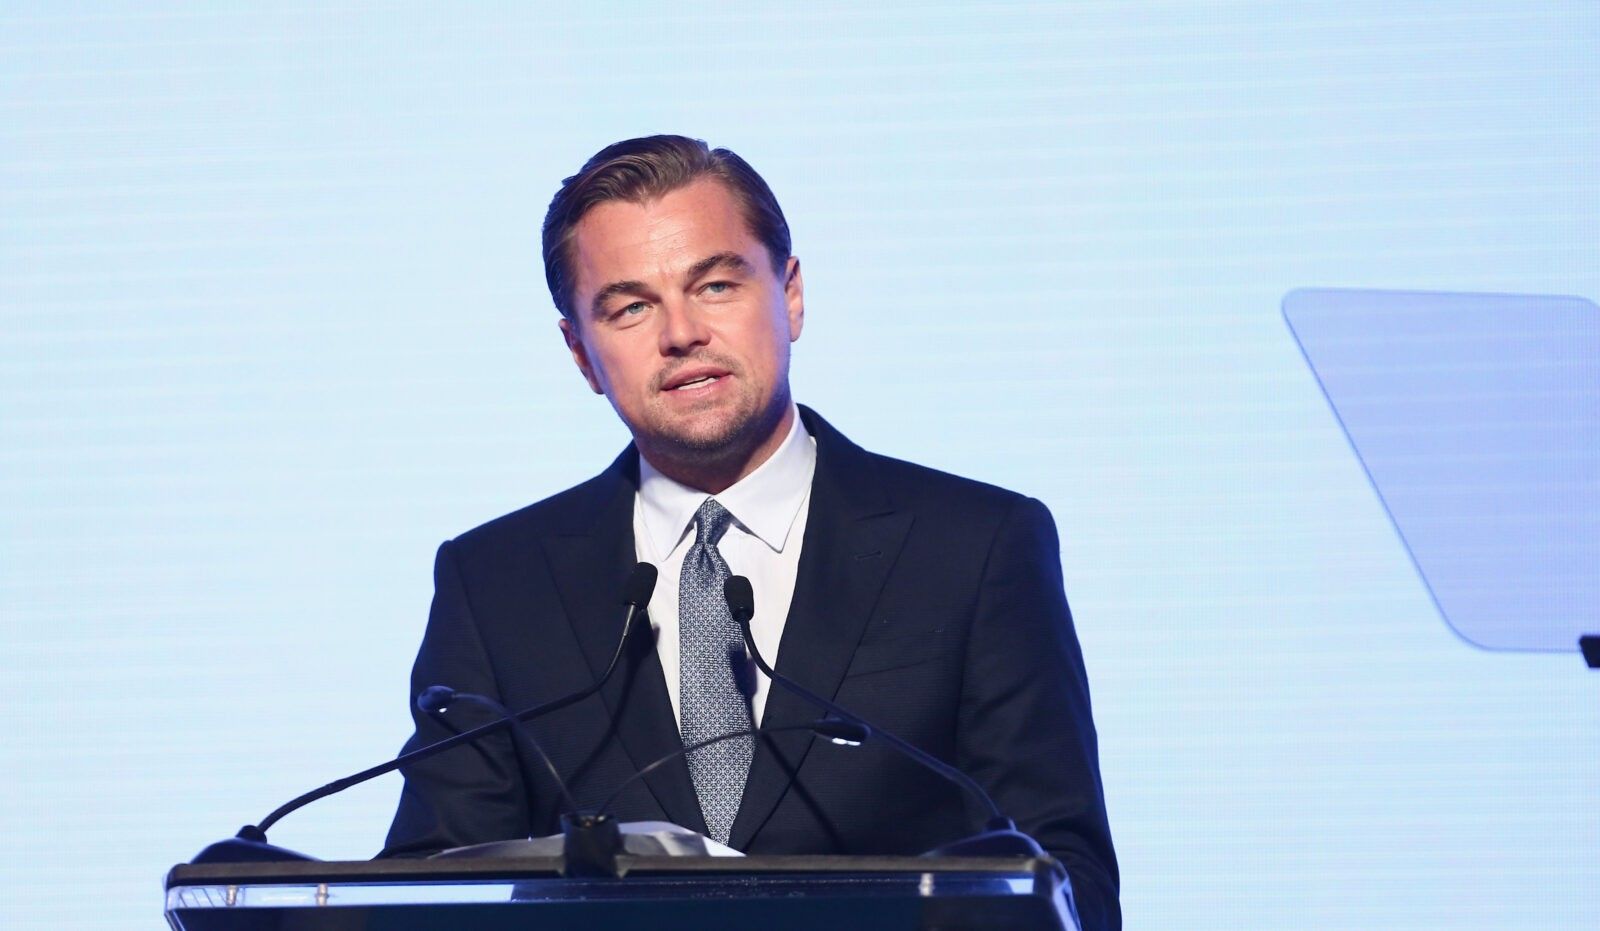 Leonardo DiCaprio Reveals His $5 Million Plan to Save the Amazon Rainforest